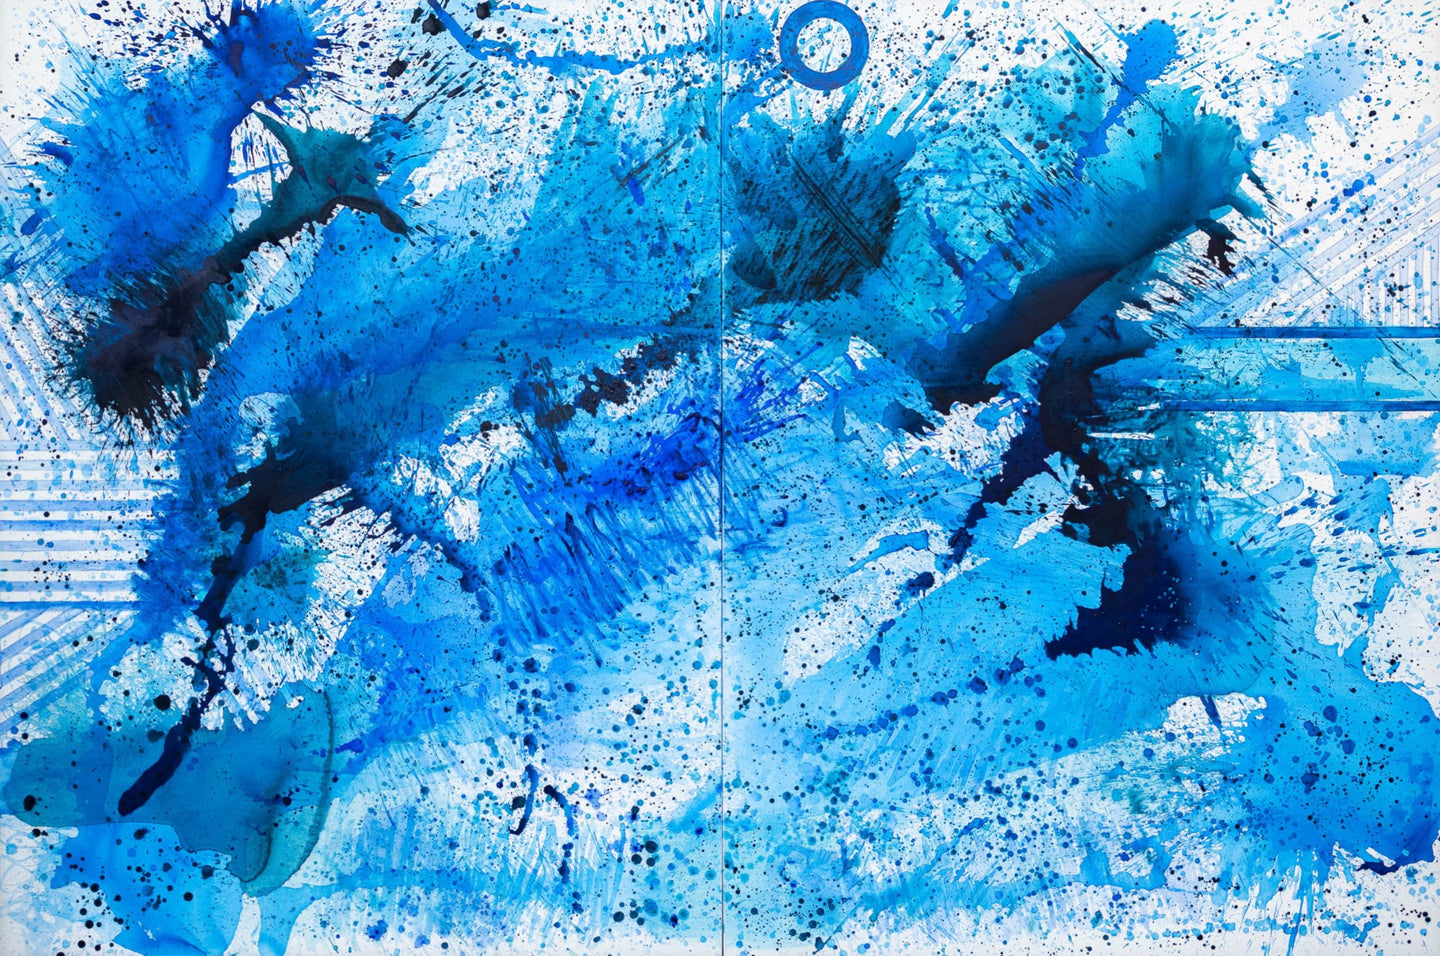 J. Steven Manolis, Splash, 2020, Acrylic on canvas, 96 x 144 inches, $175,000, extra large blue abstract art